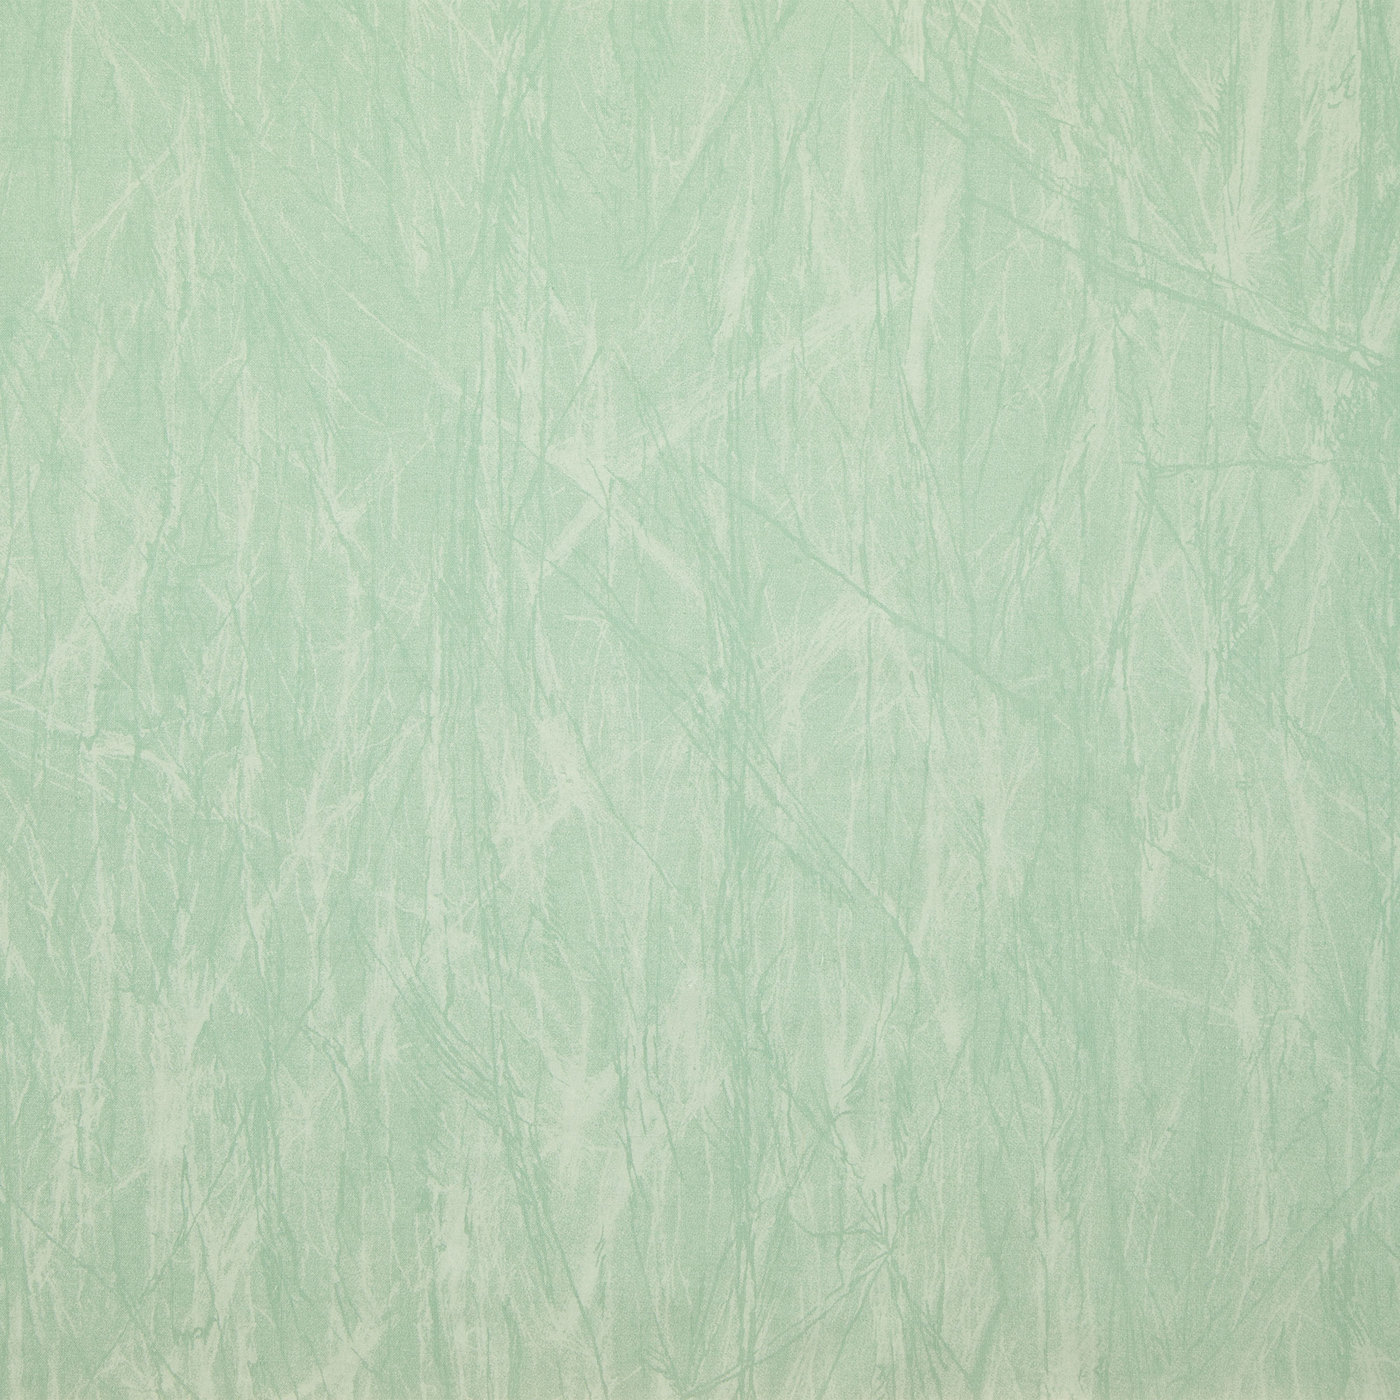 Seafoam Green Cracked Ice Cotton Calico Fabric